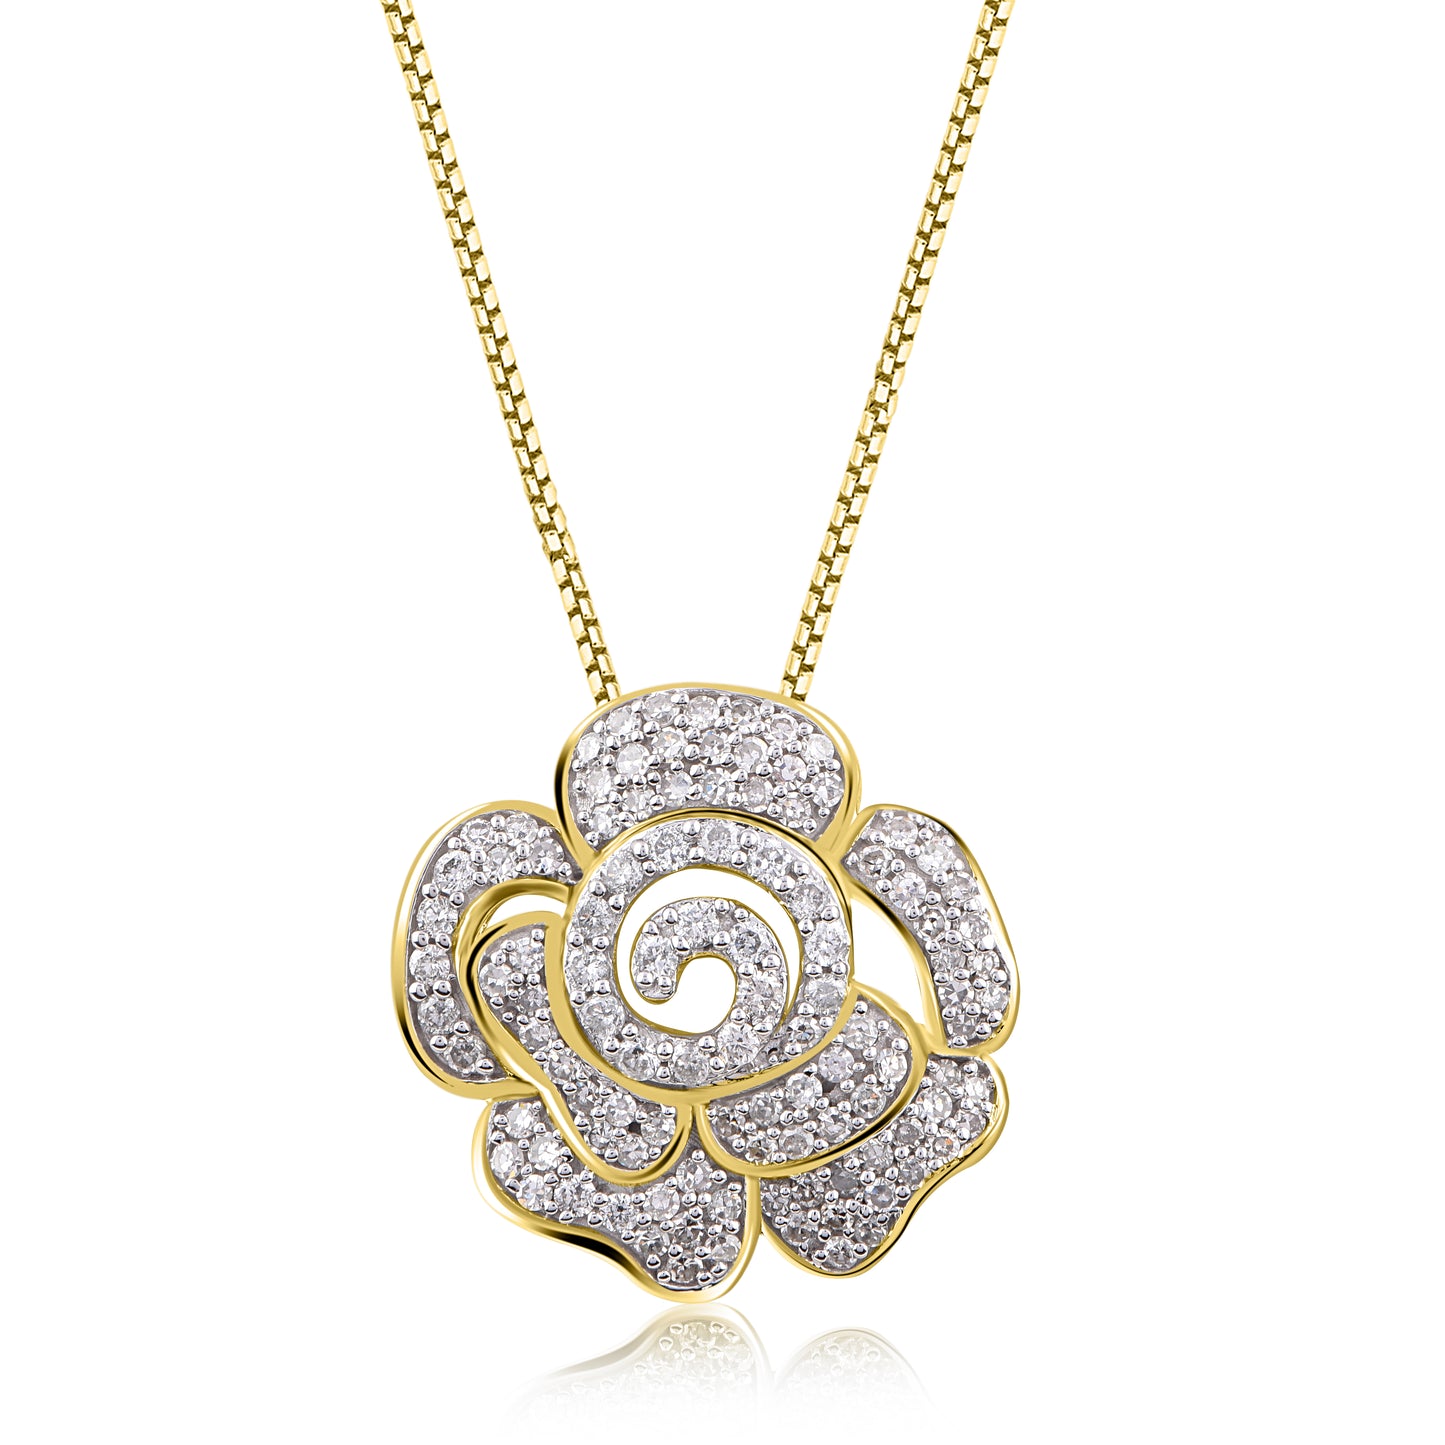 Rose Flower Pendant Necklace in 10k Gold